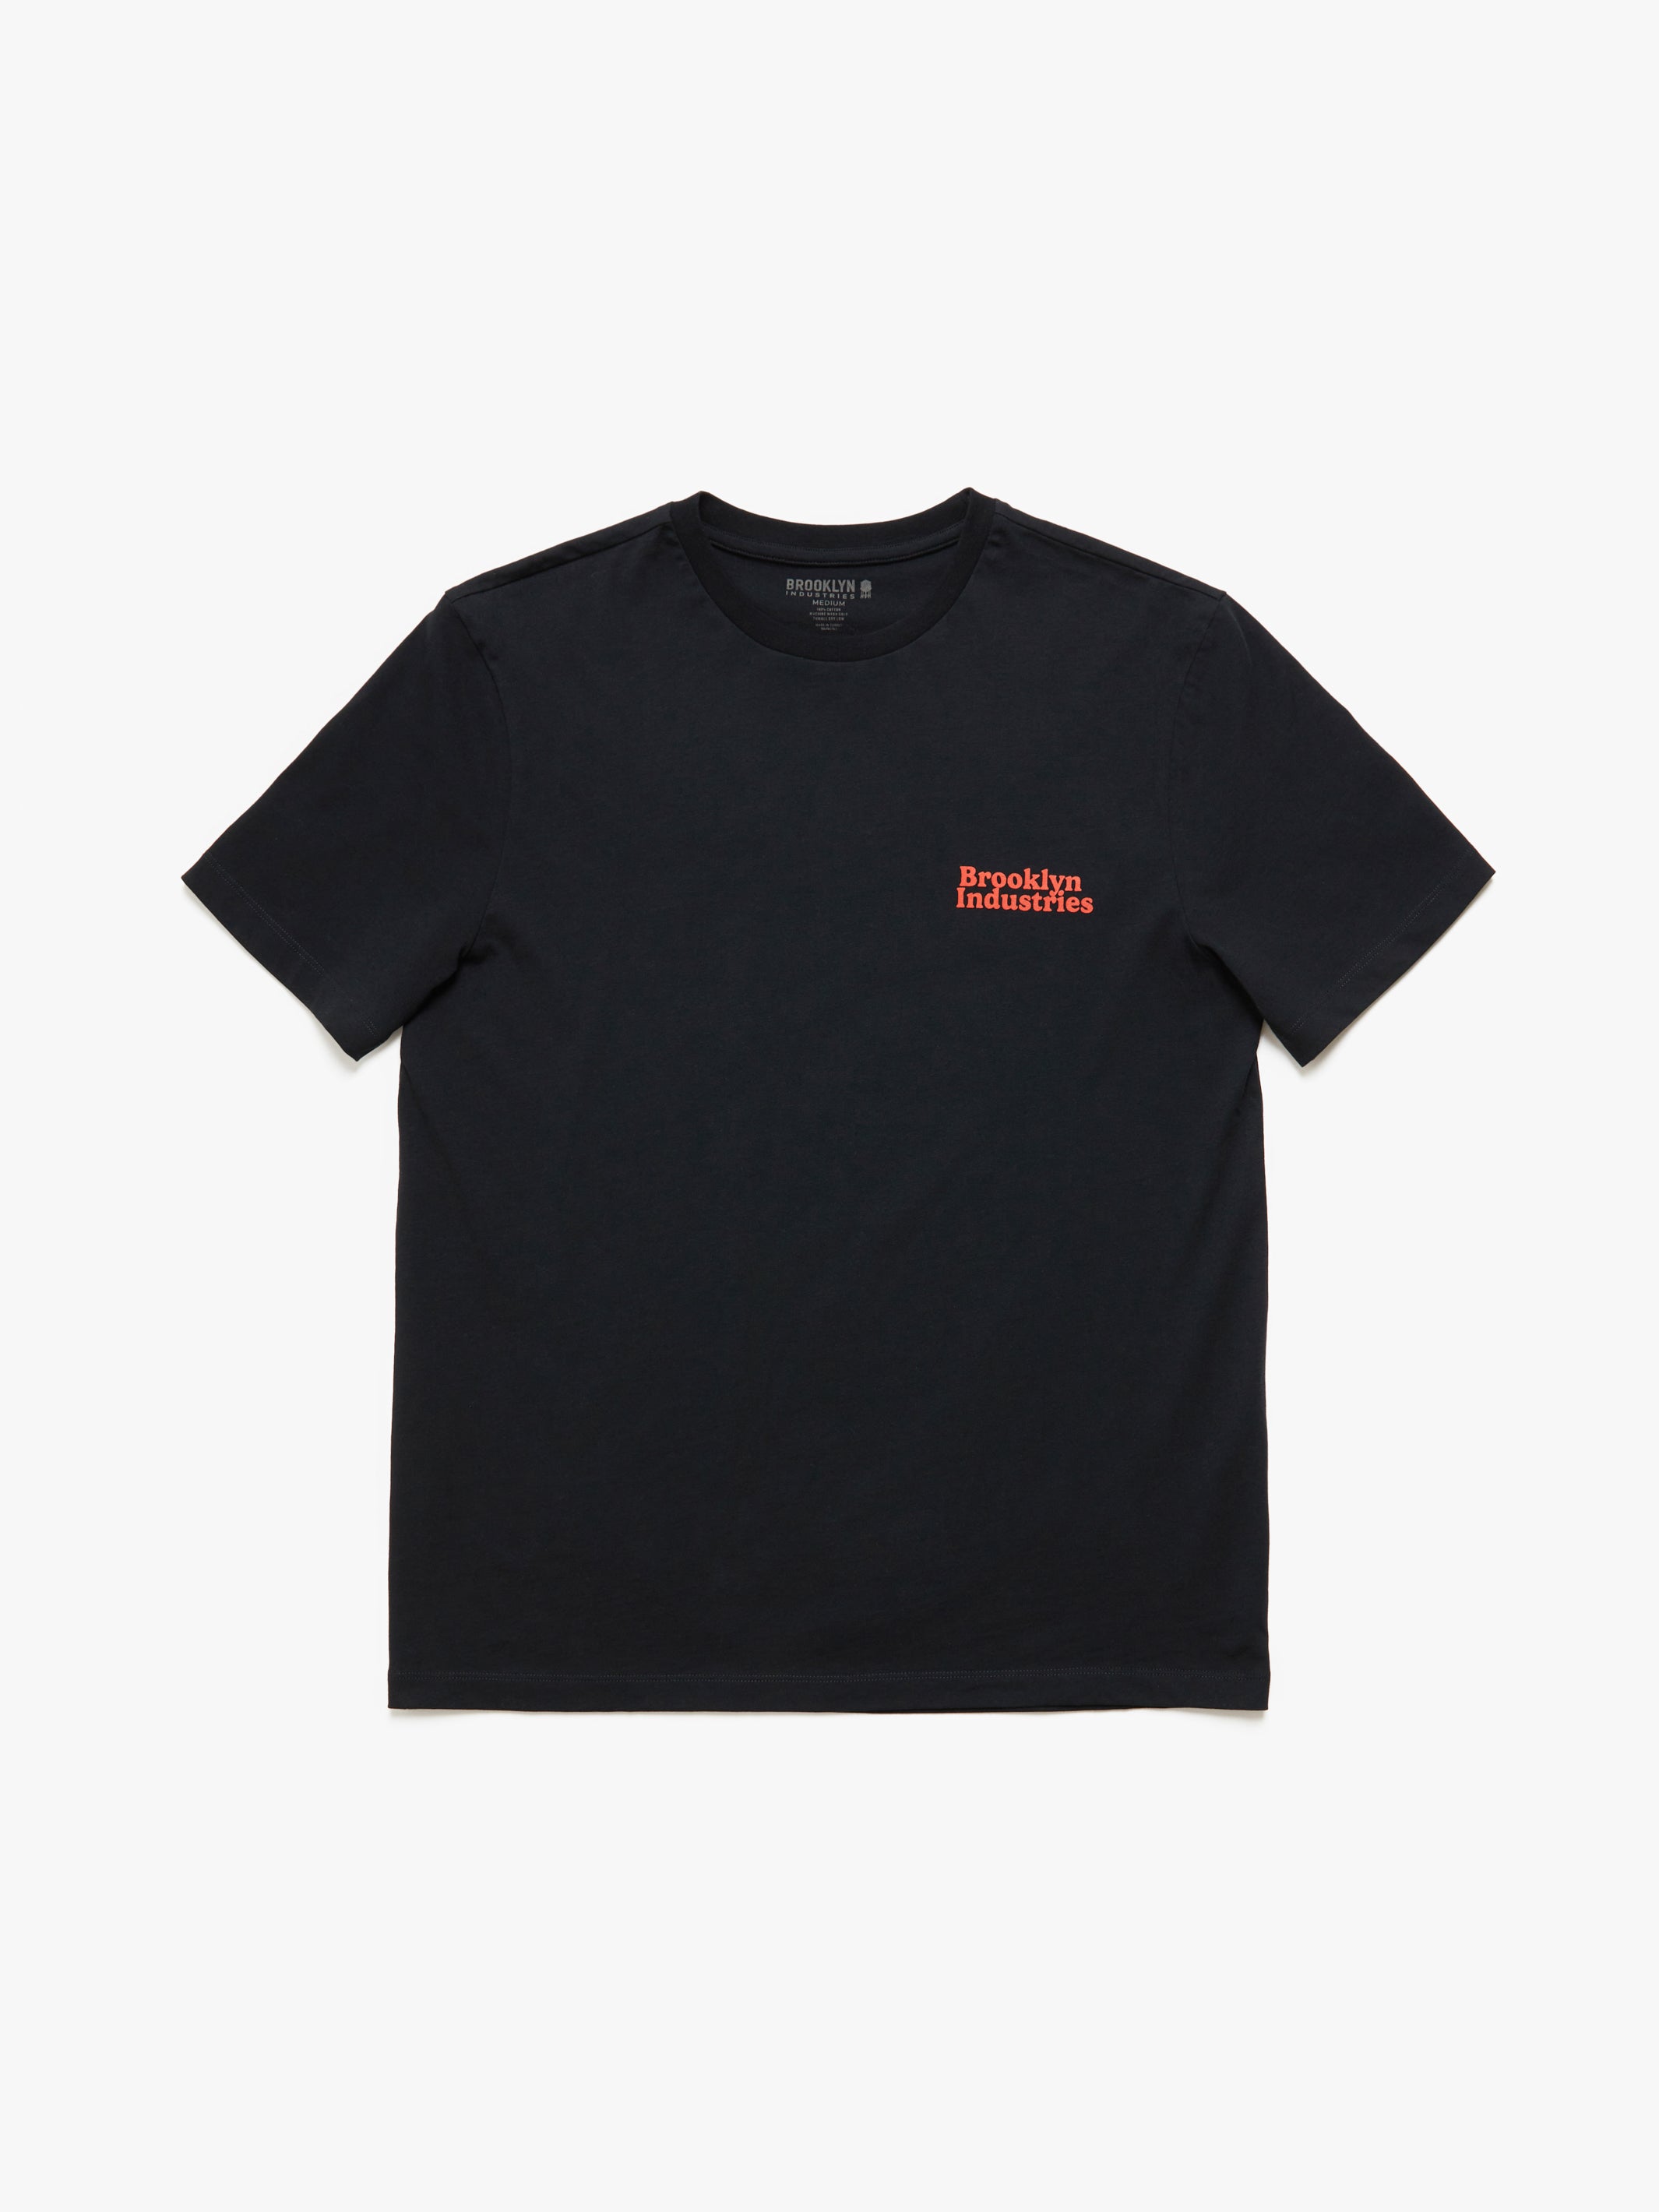 Men's NYC T-shirt in Black - BROOKLYN INDUSTRIES